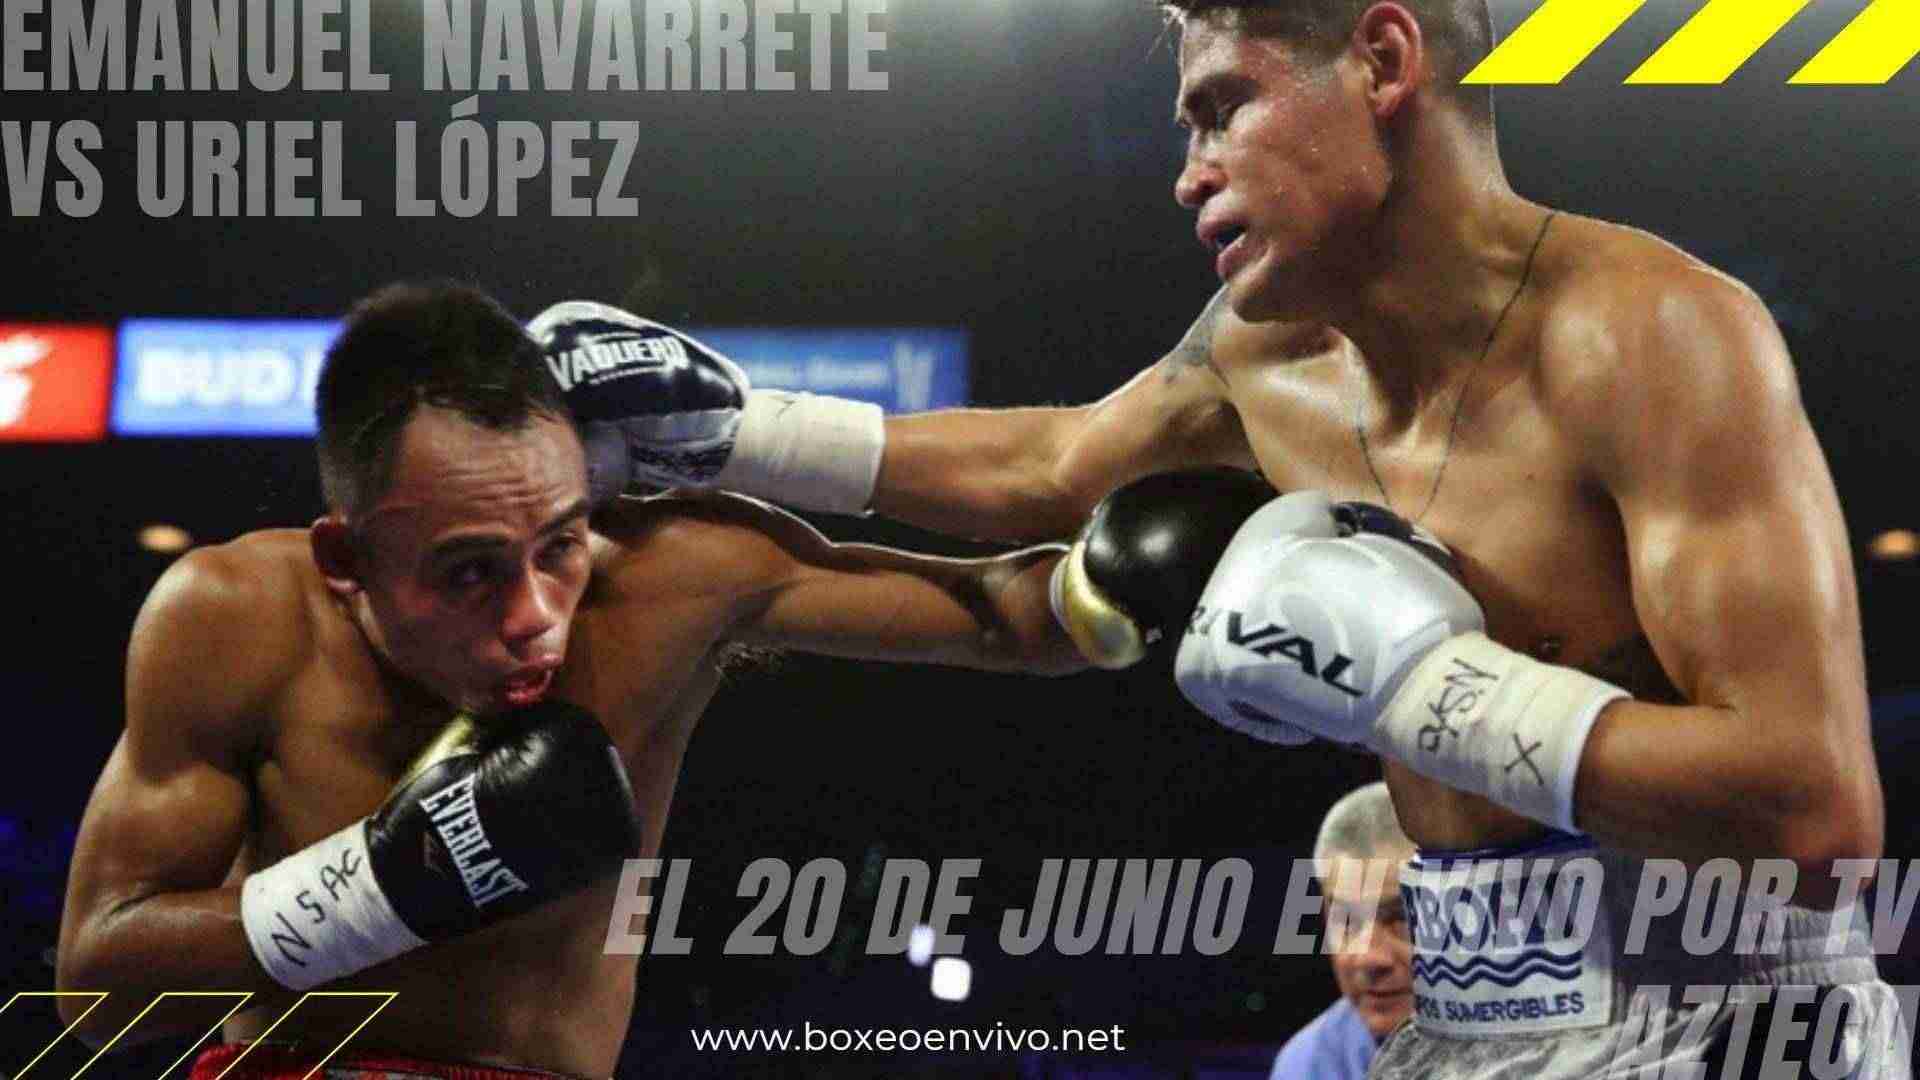 Emanuel Navarrete vs Uriel López